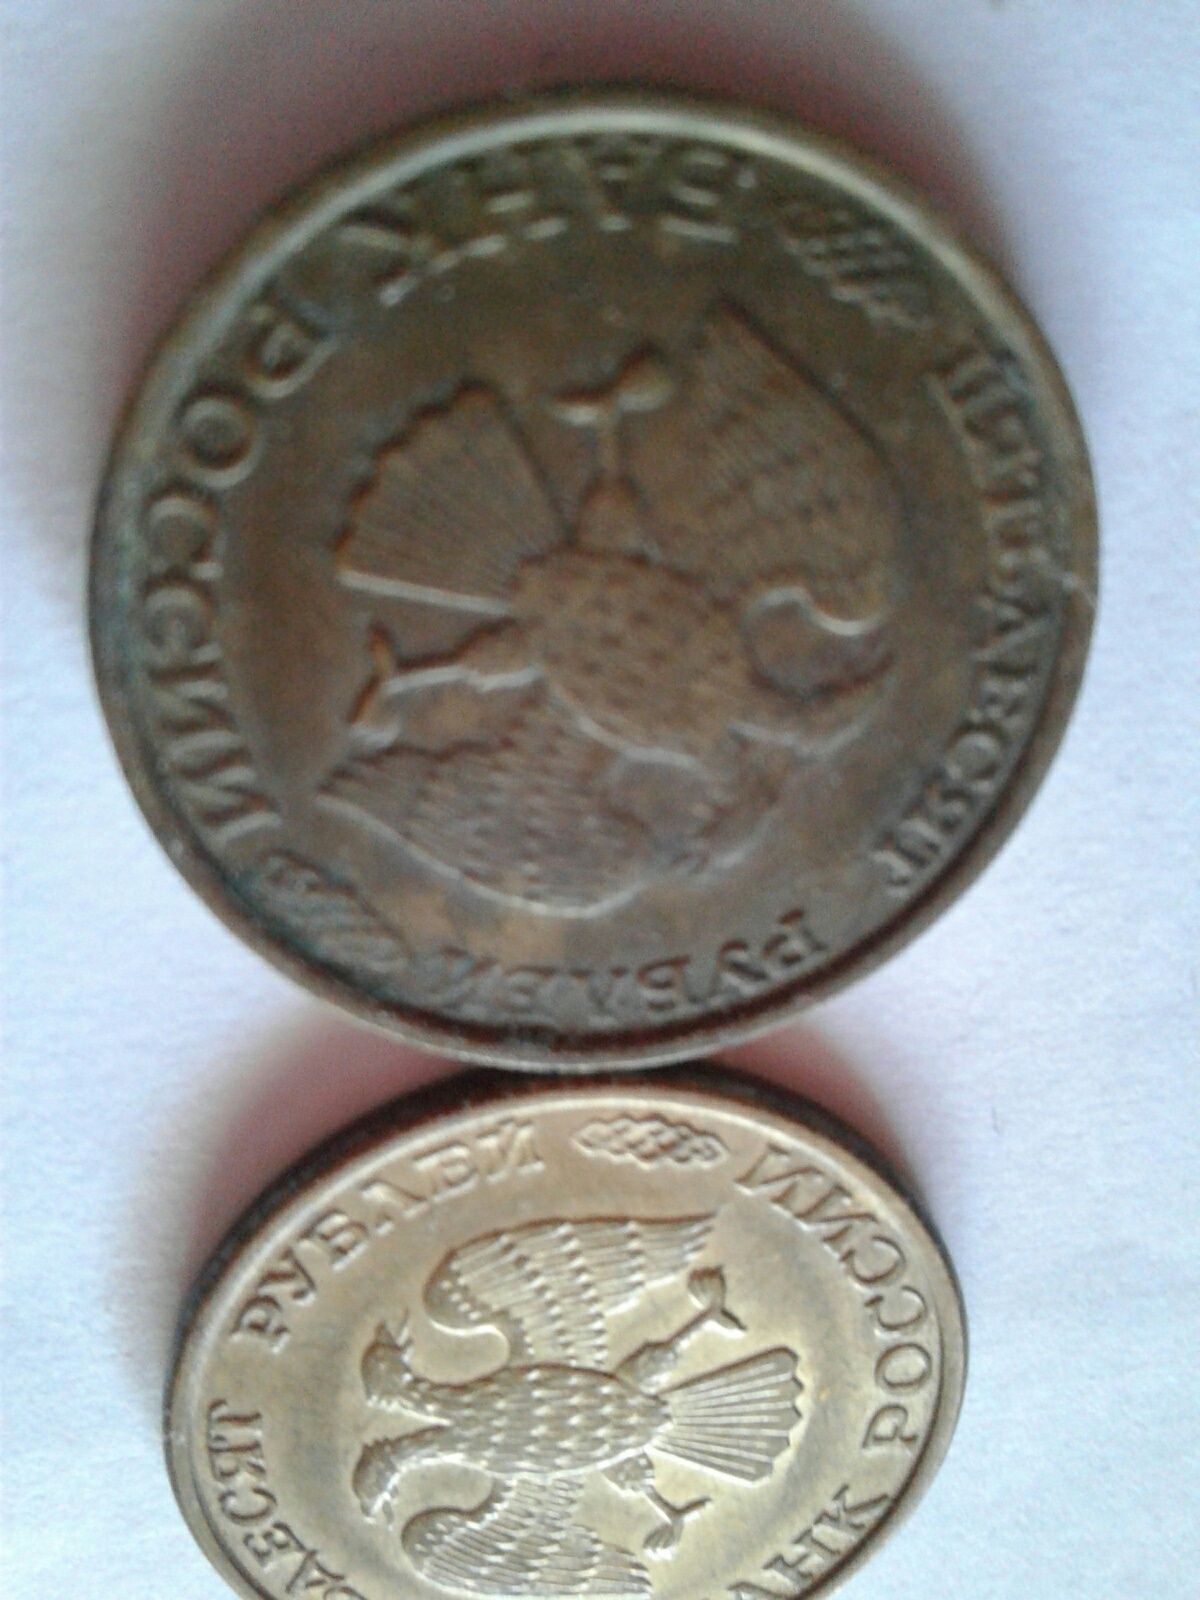 50 рублей 1993 монеты боны купюры